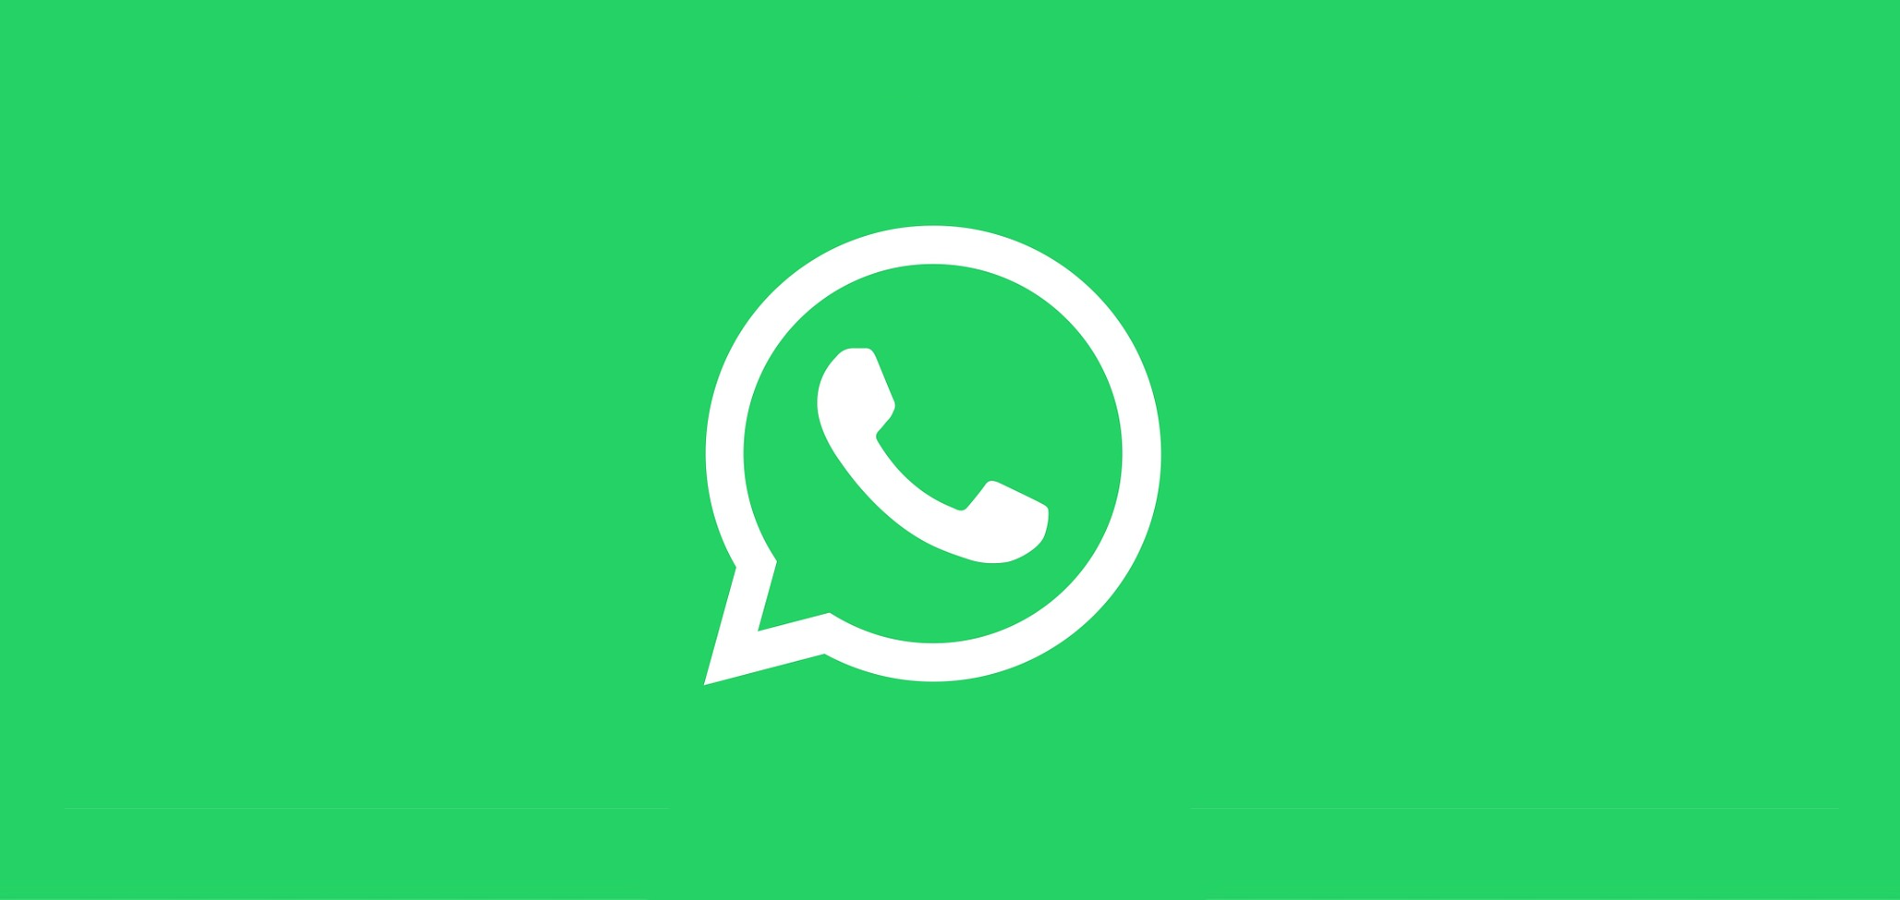 В мессенджере WhatsApp обновят дизайн